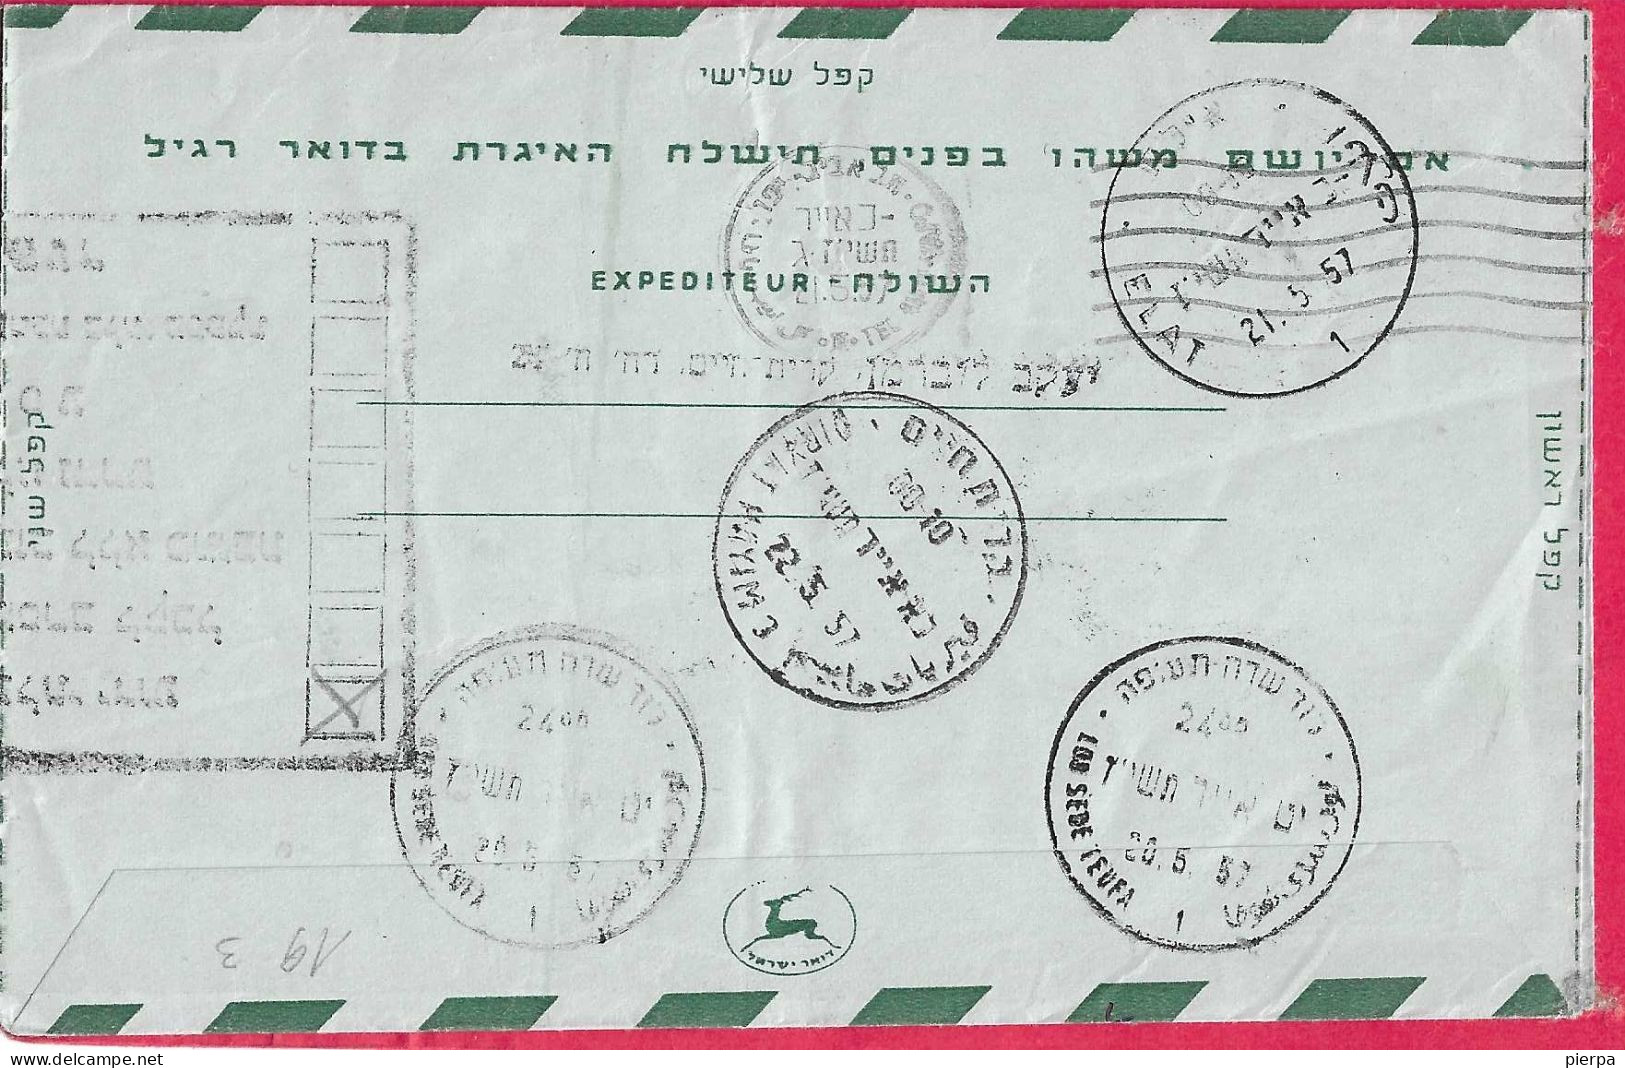 ISRAELE - INTERO AEROGRAMMA 250 - VIAGGIATO DA "LOD SED TEUFA" PER RACCOMANDATA *20.5.57* - Airmail